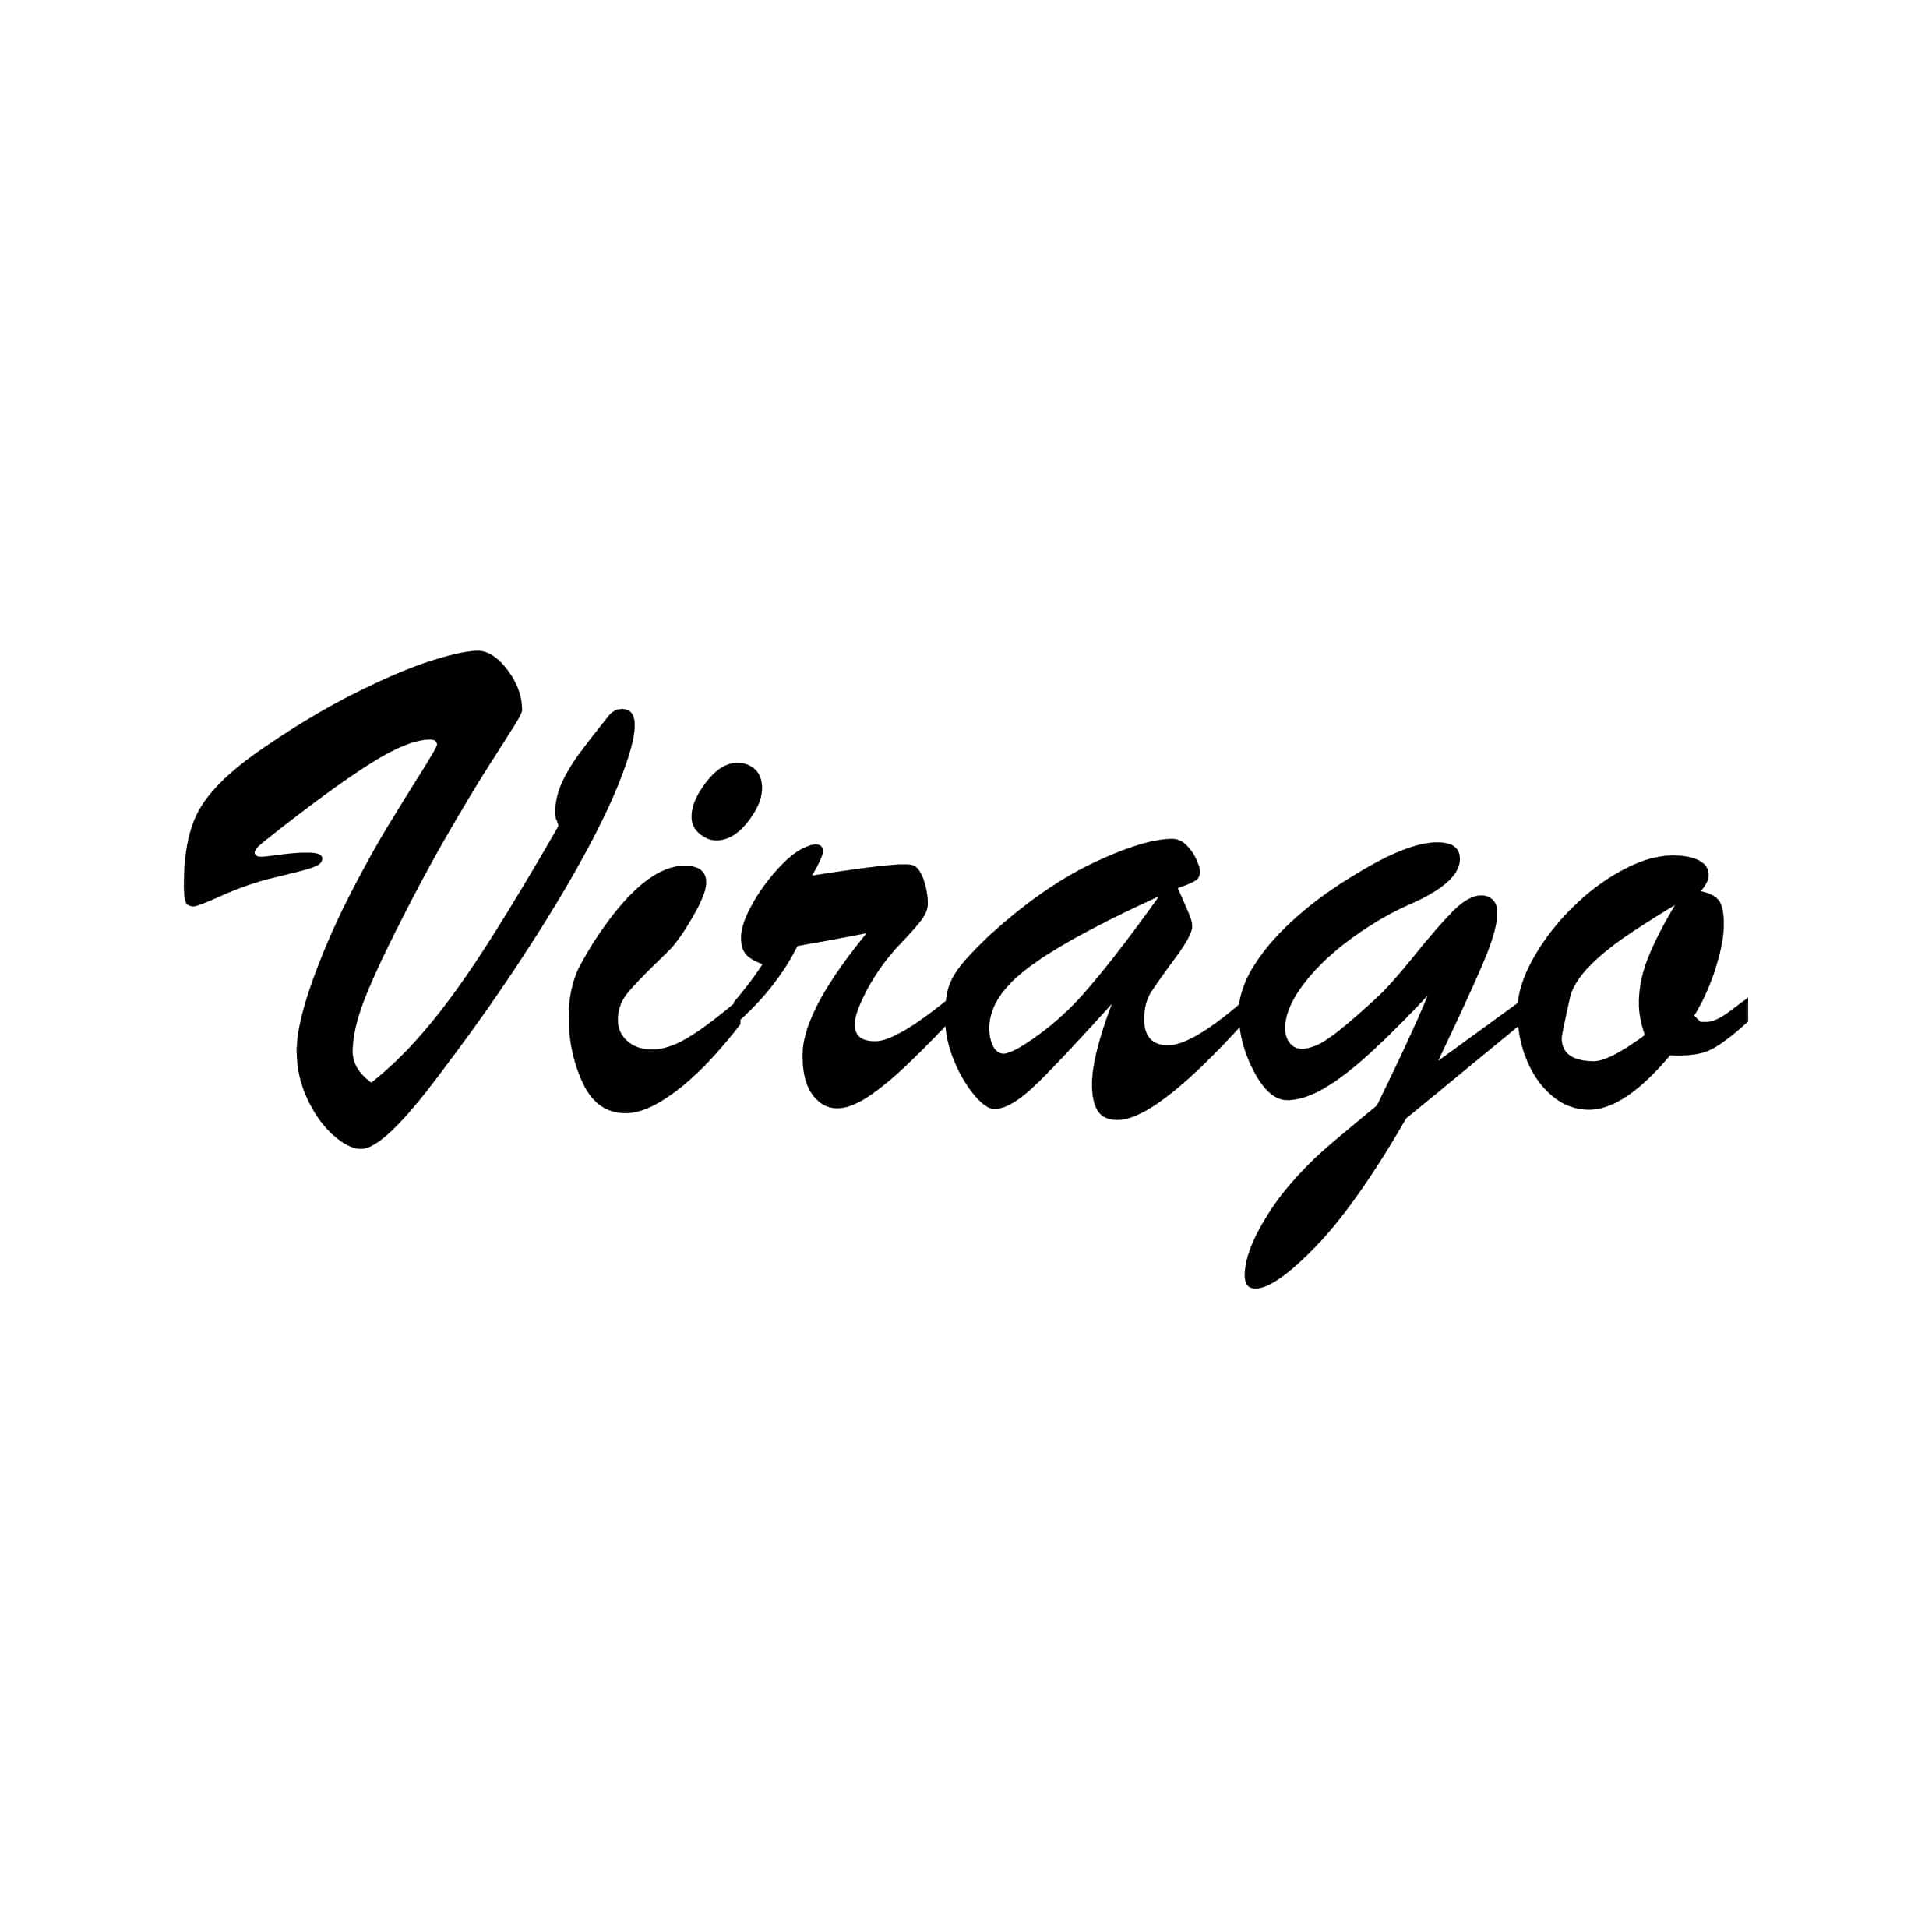 stickers-virago-yamaha-ref79-autocollant-moto-sticker-deux-roue-autocollants-decals-sponsors-tuning-sport-logo-bike-scooter-min